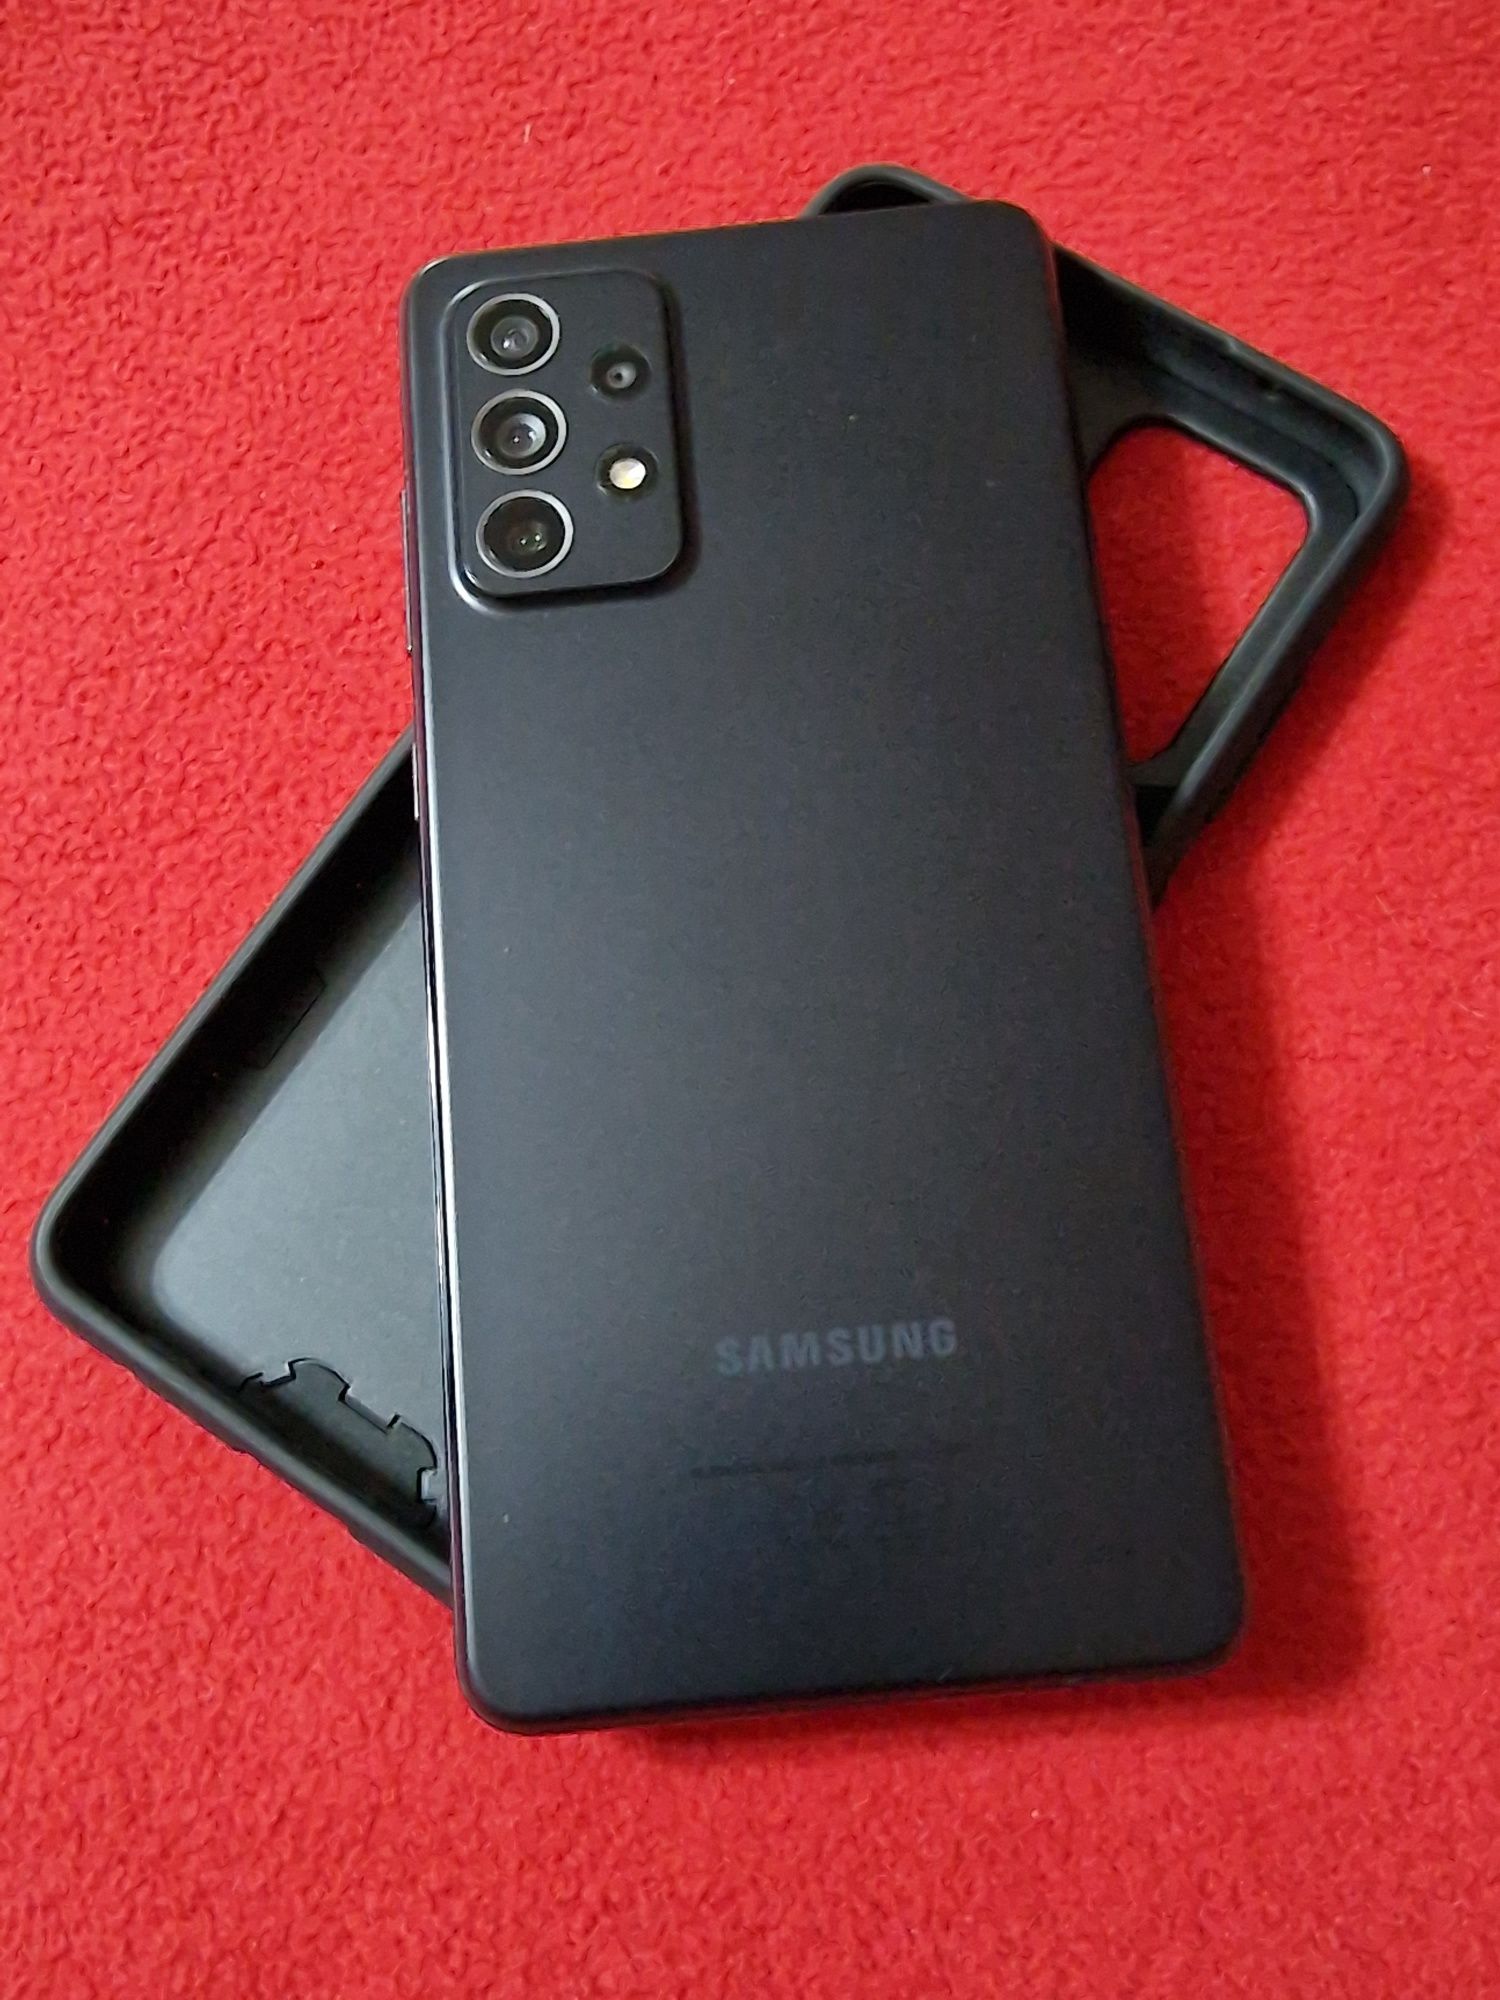 Samsung Galaxy A72 Negru 128Gb, 6Gb Ram, Impecabil, Folie Sticla, Husa